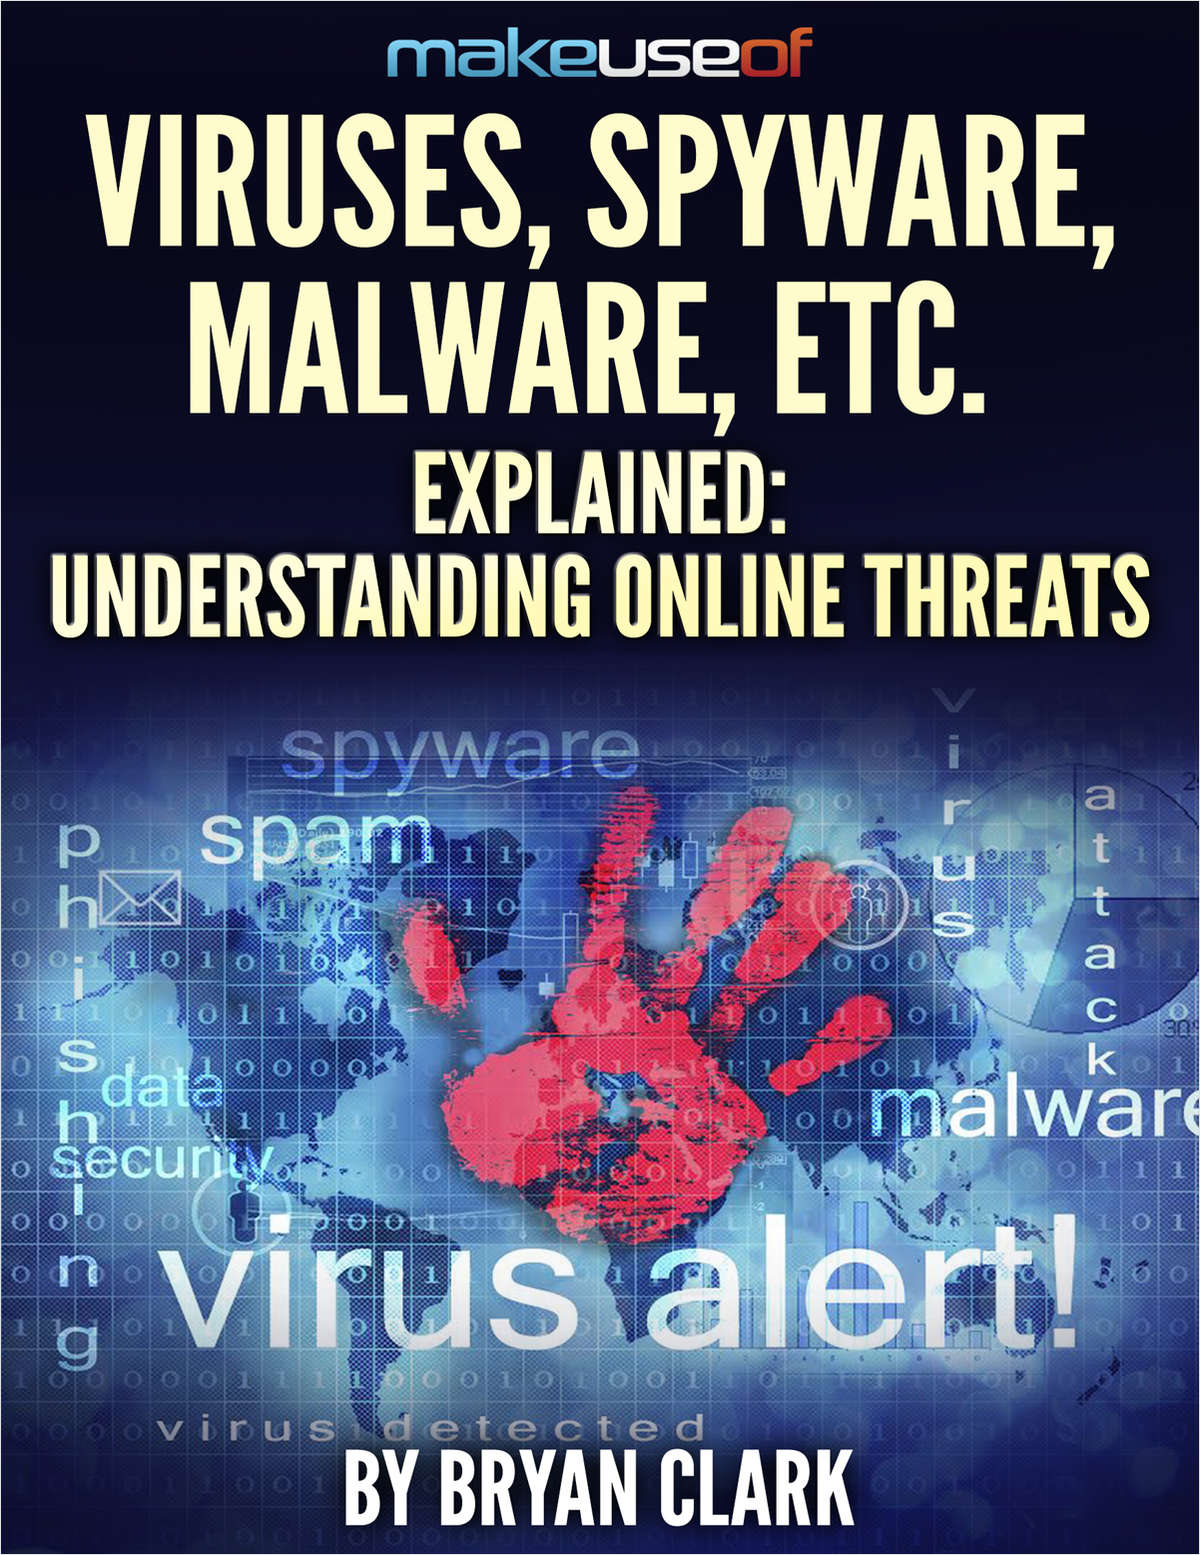 w make192c8 - Viruses, Spyware, Malware, etc. Explained: Understanding Online Threats